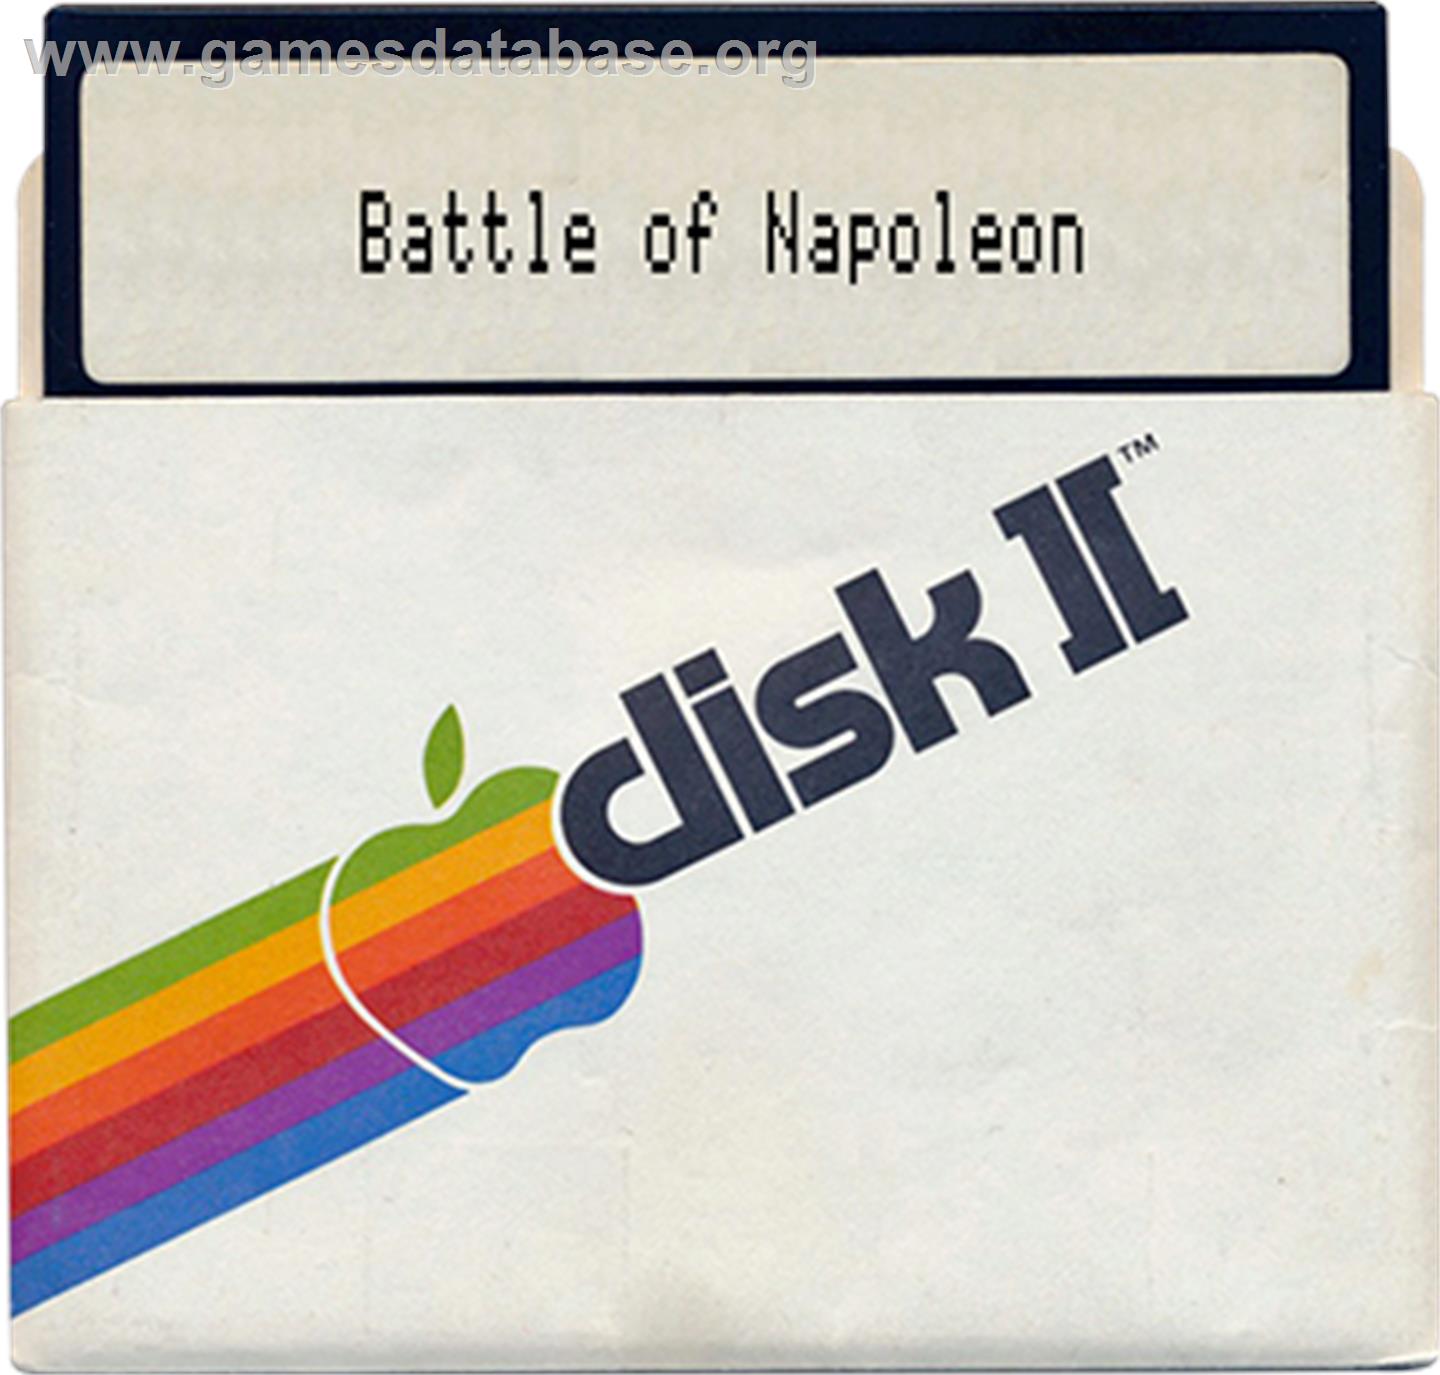 Battles of Napoleon - Apple II - Artwork - Disc